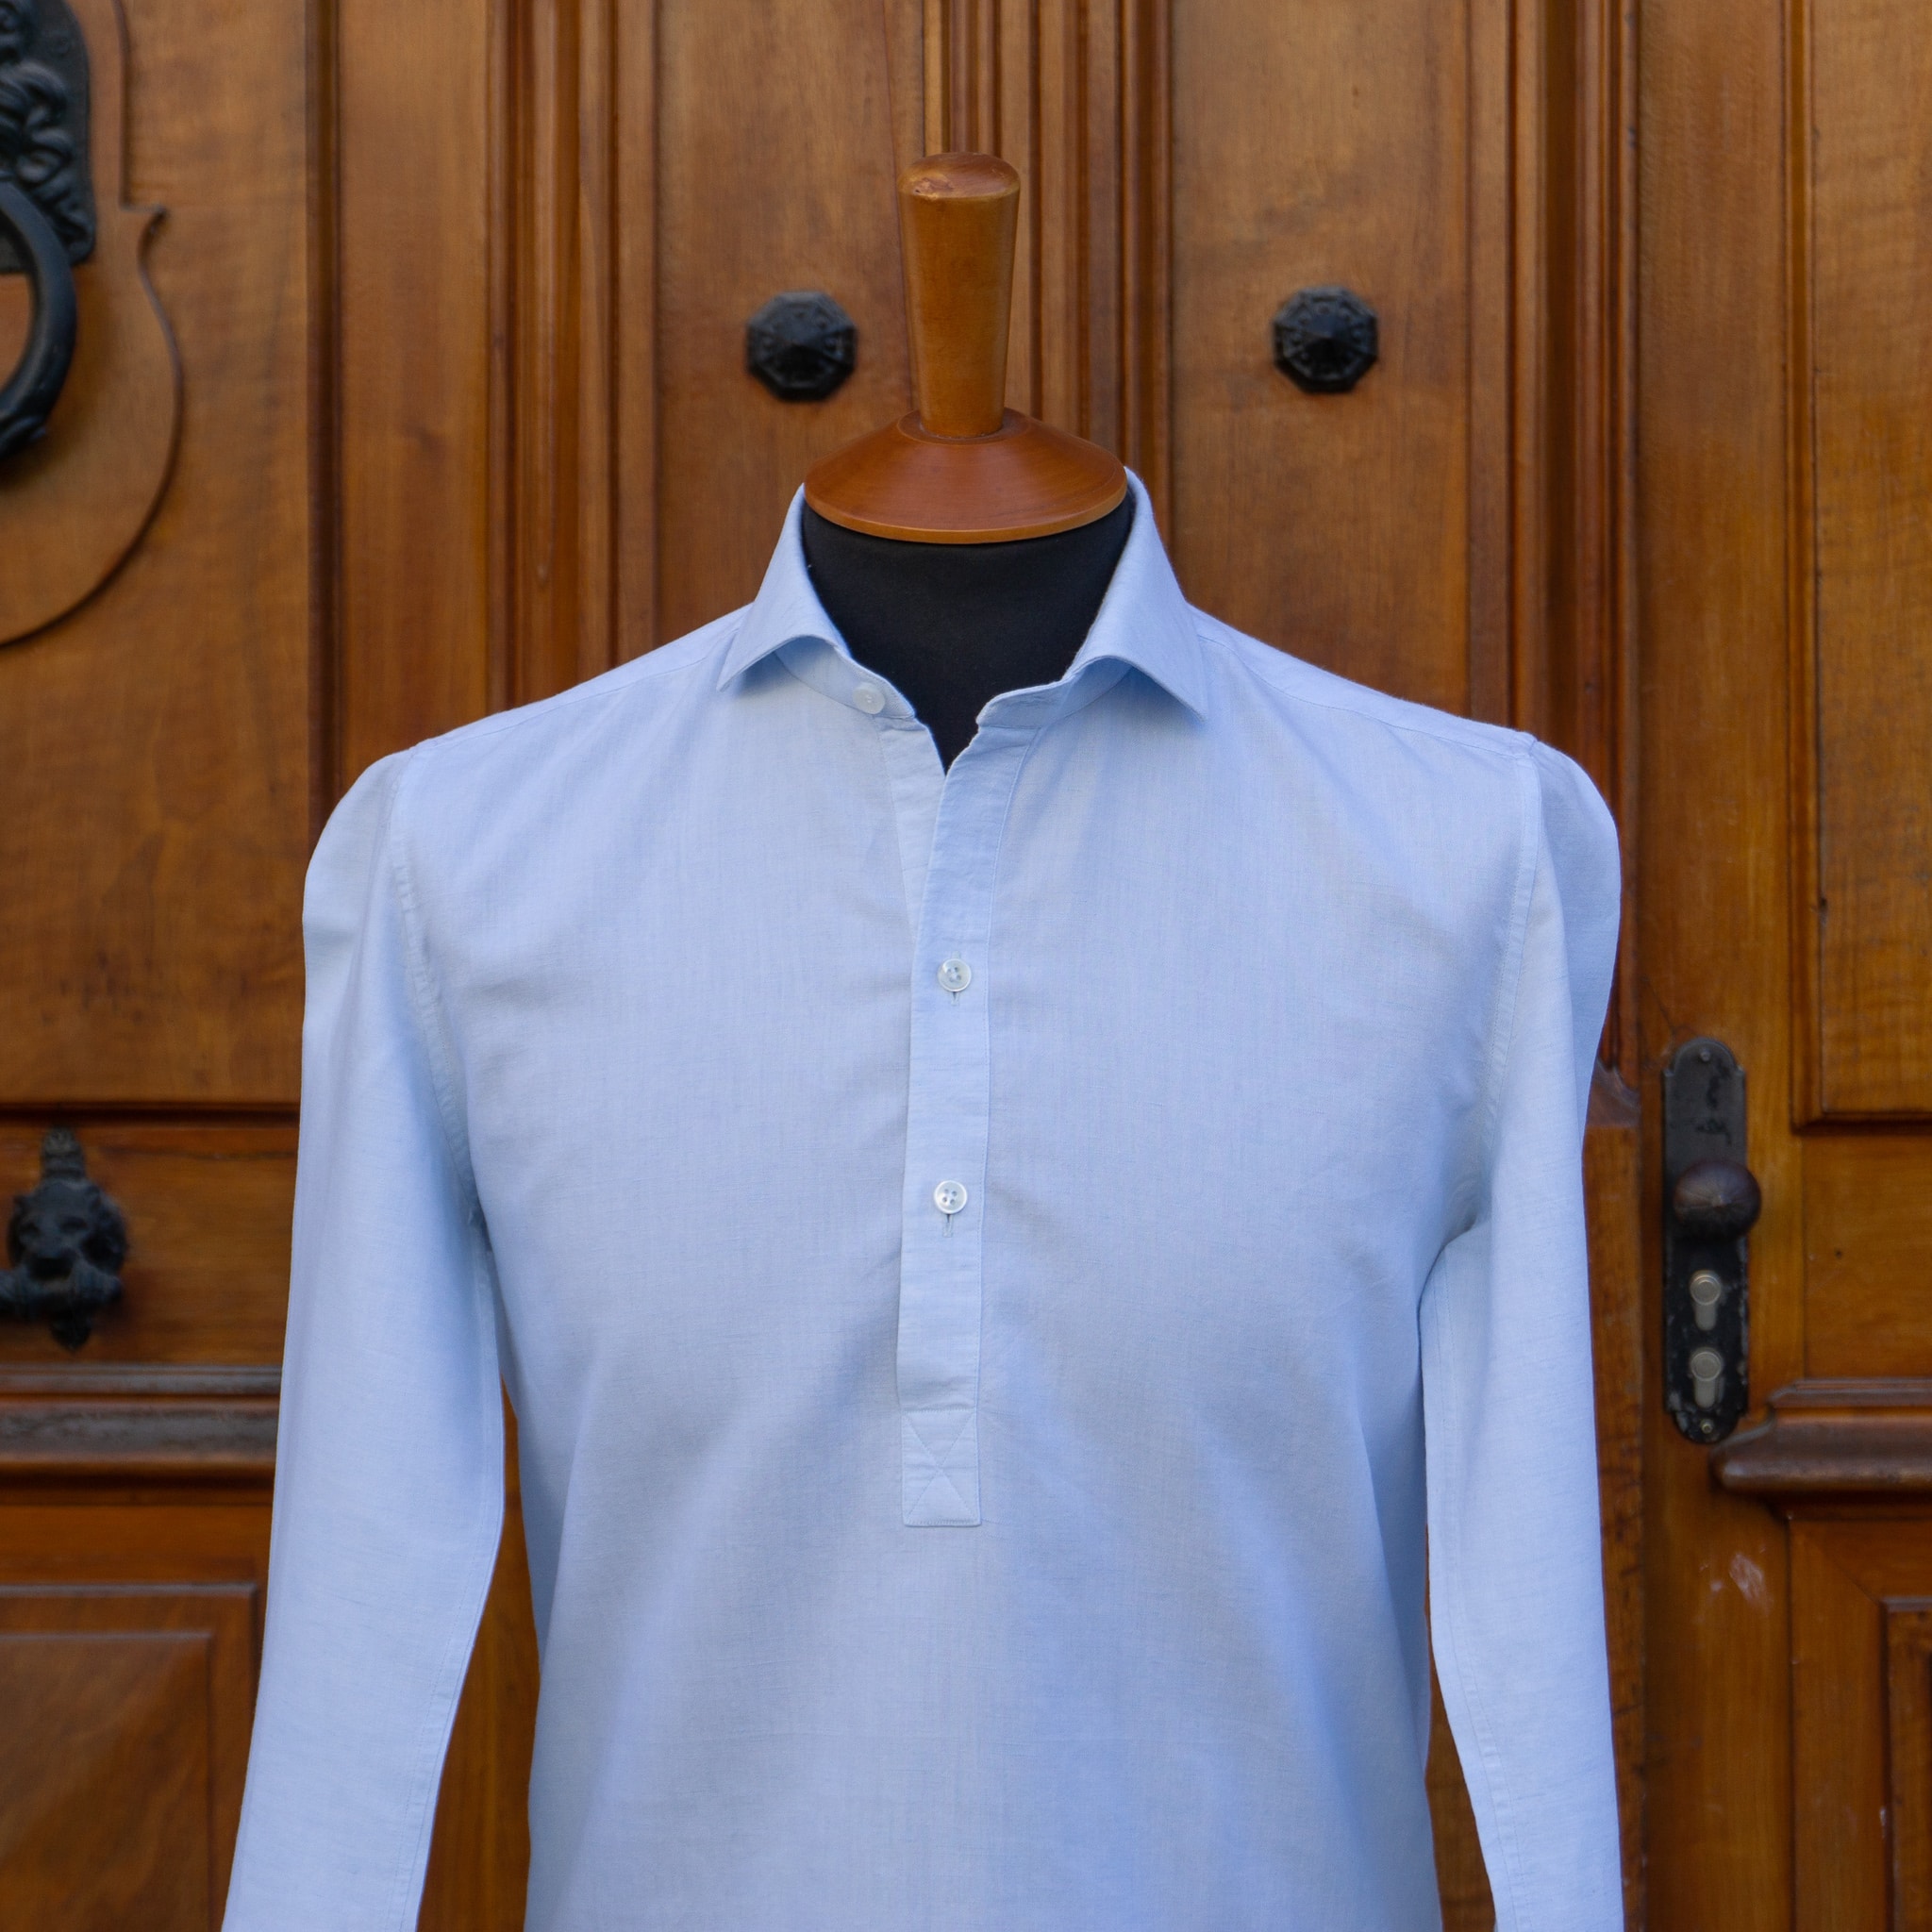 cotton and linen popover shirt - chemise polo vue buste - chemise sur mesure geneve - chemise polo - Revenga Chemisiers Genevois